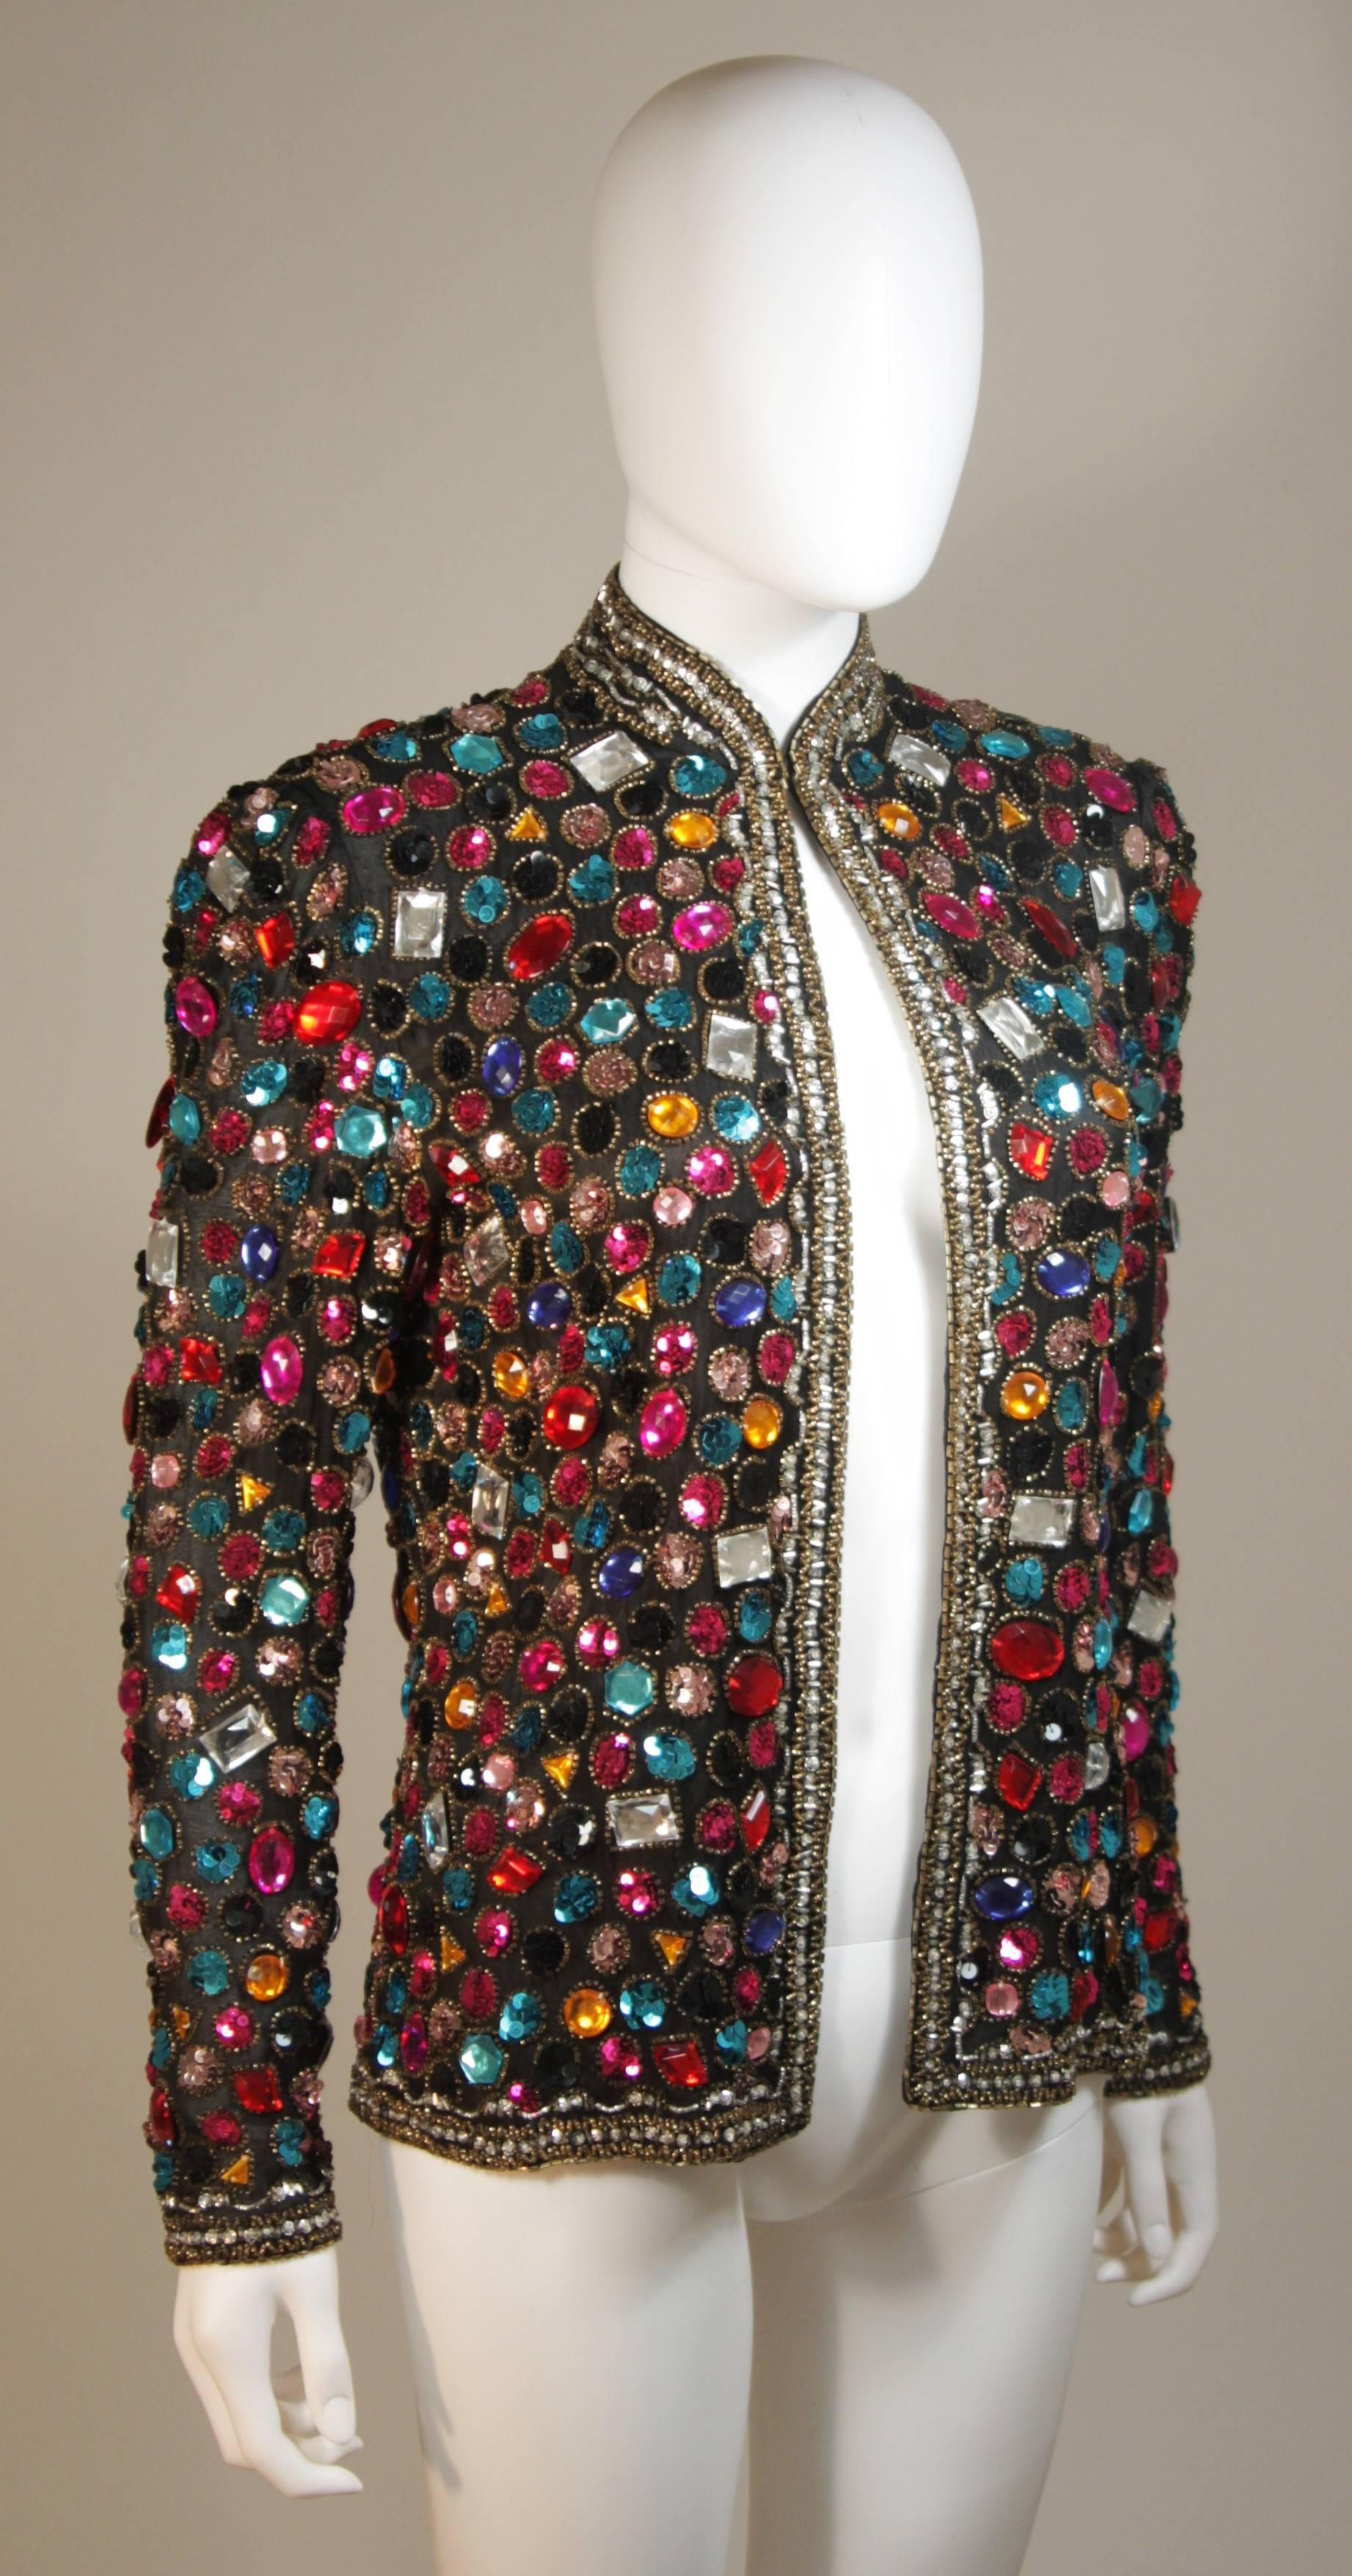 bejeweled clothing